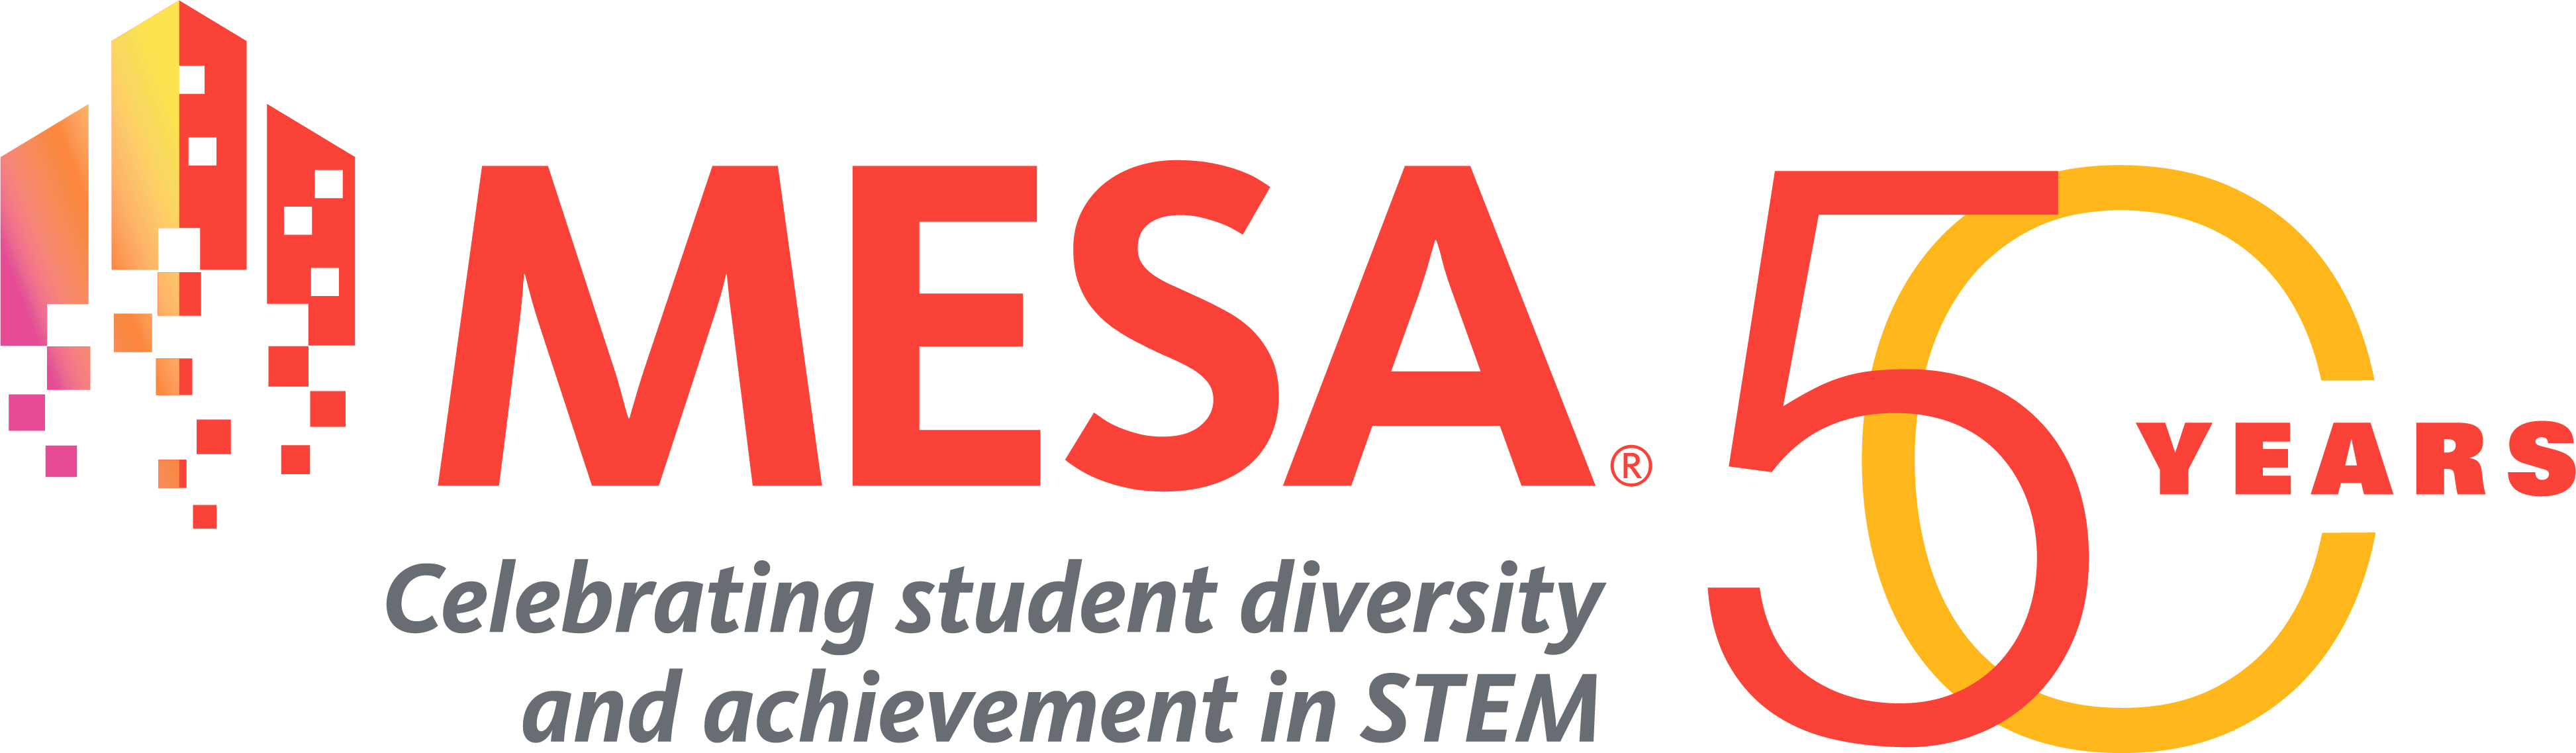 MESA 50 Anniversary Logo